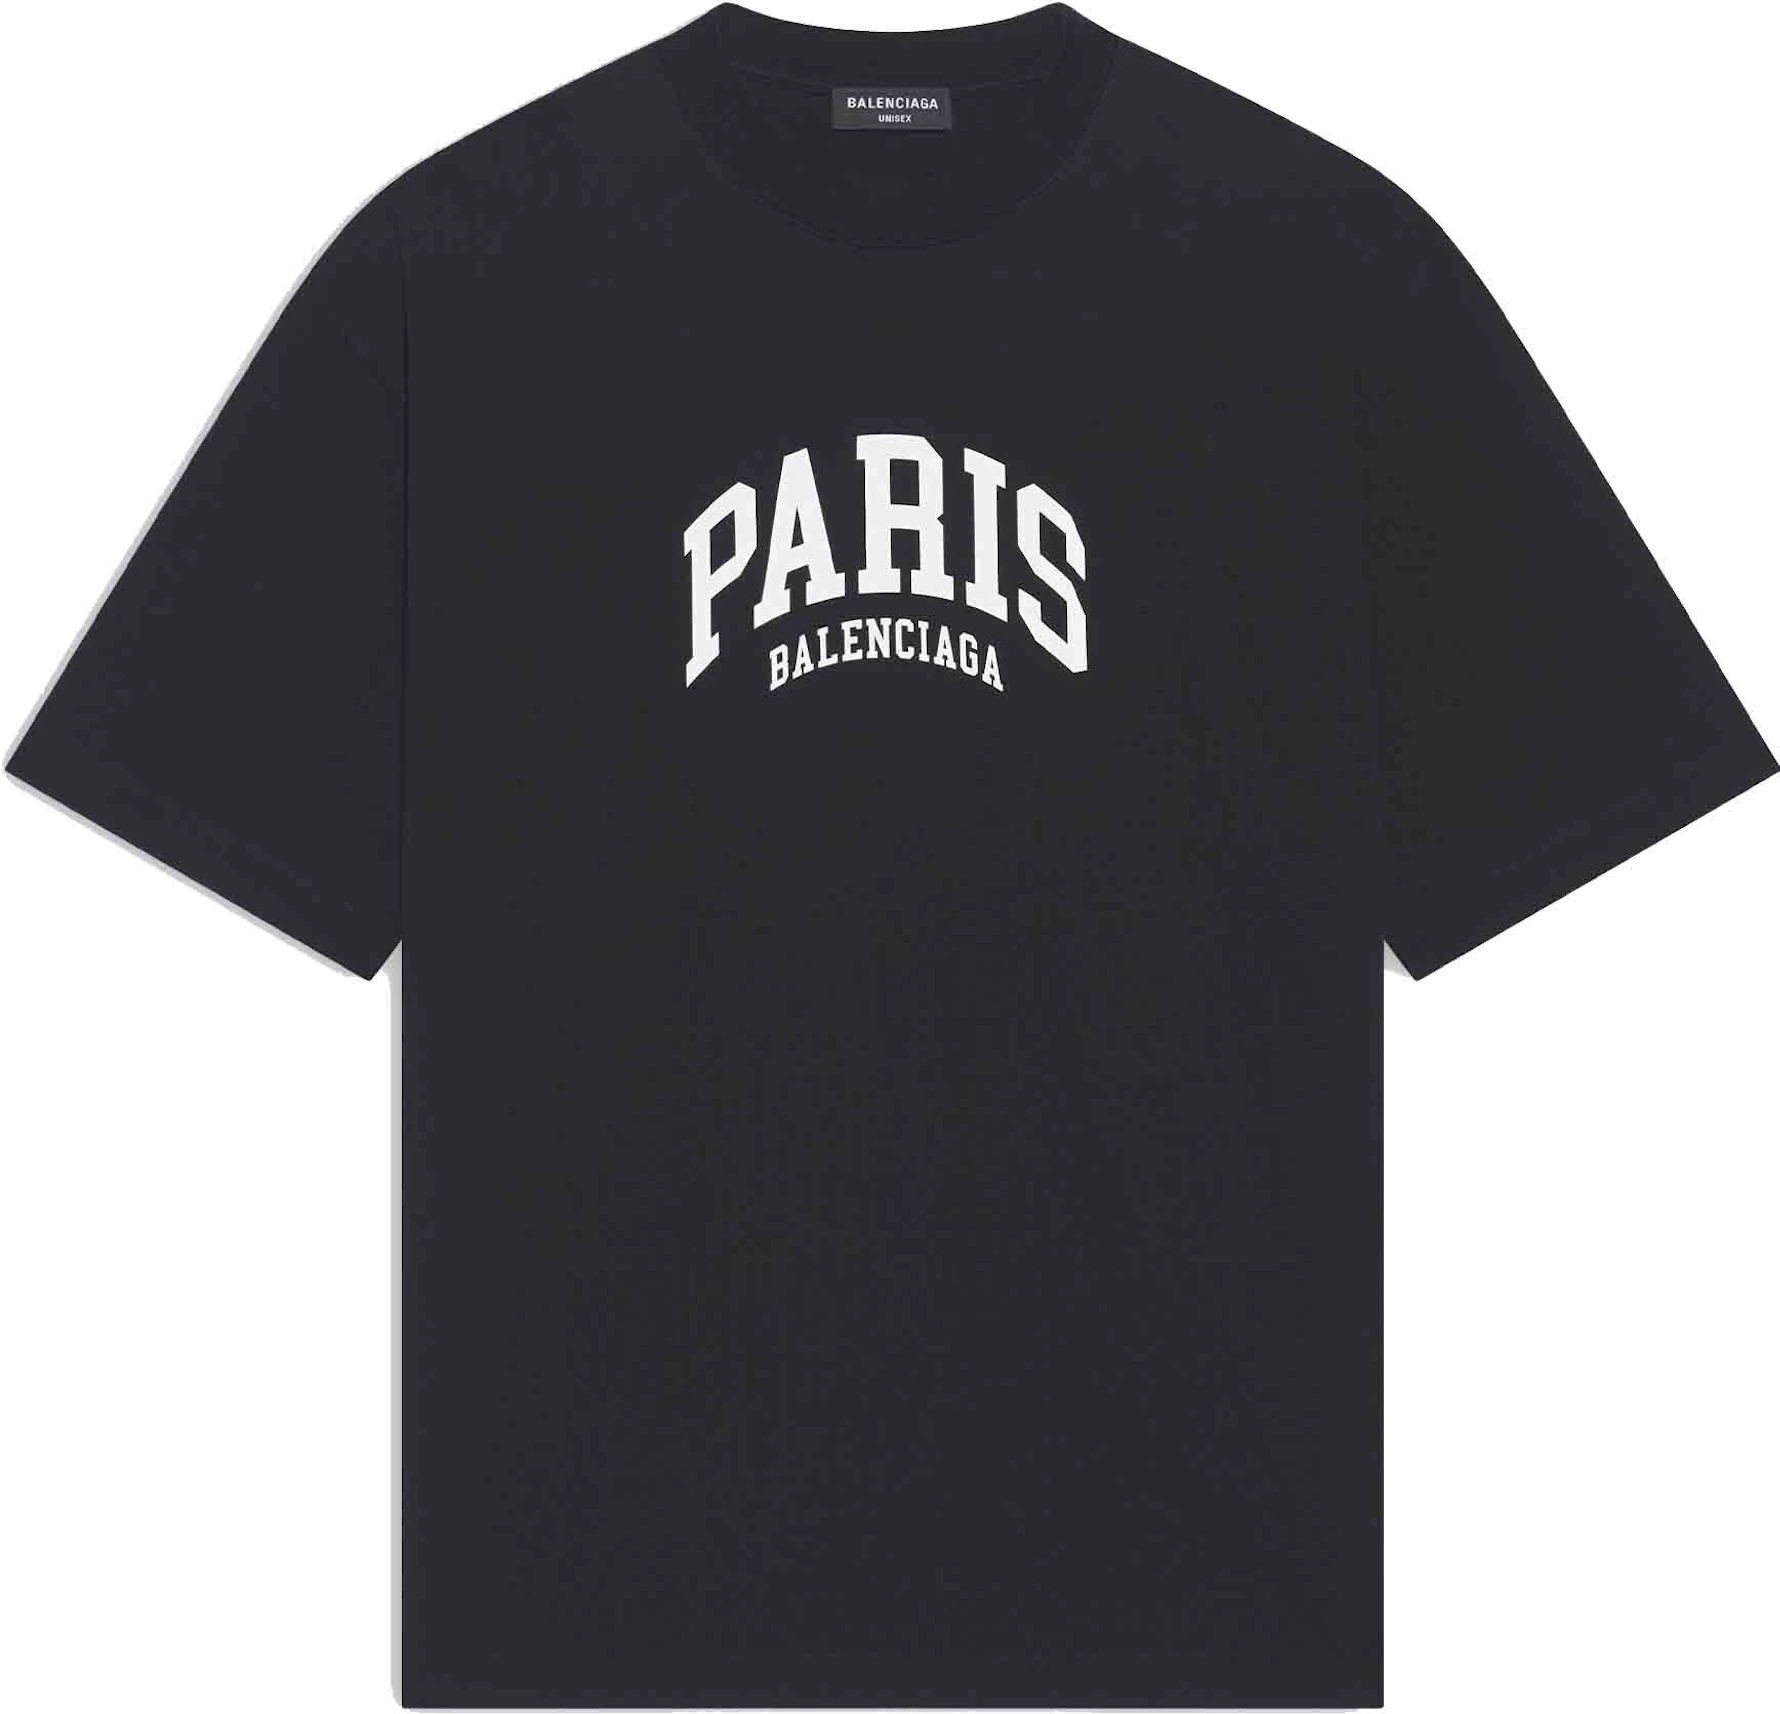 Skru ned Gøre husarbejde Ofre Balenciaga Mens Cities Paris Medium Fit T-shirt Black - US